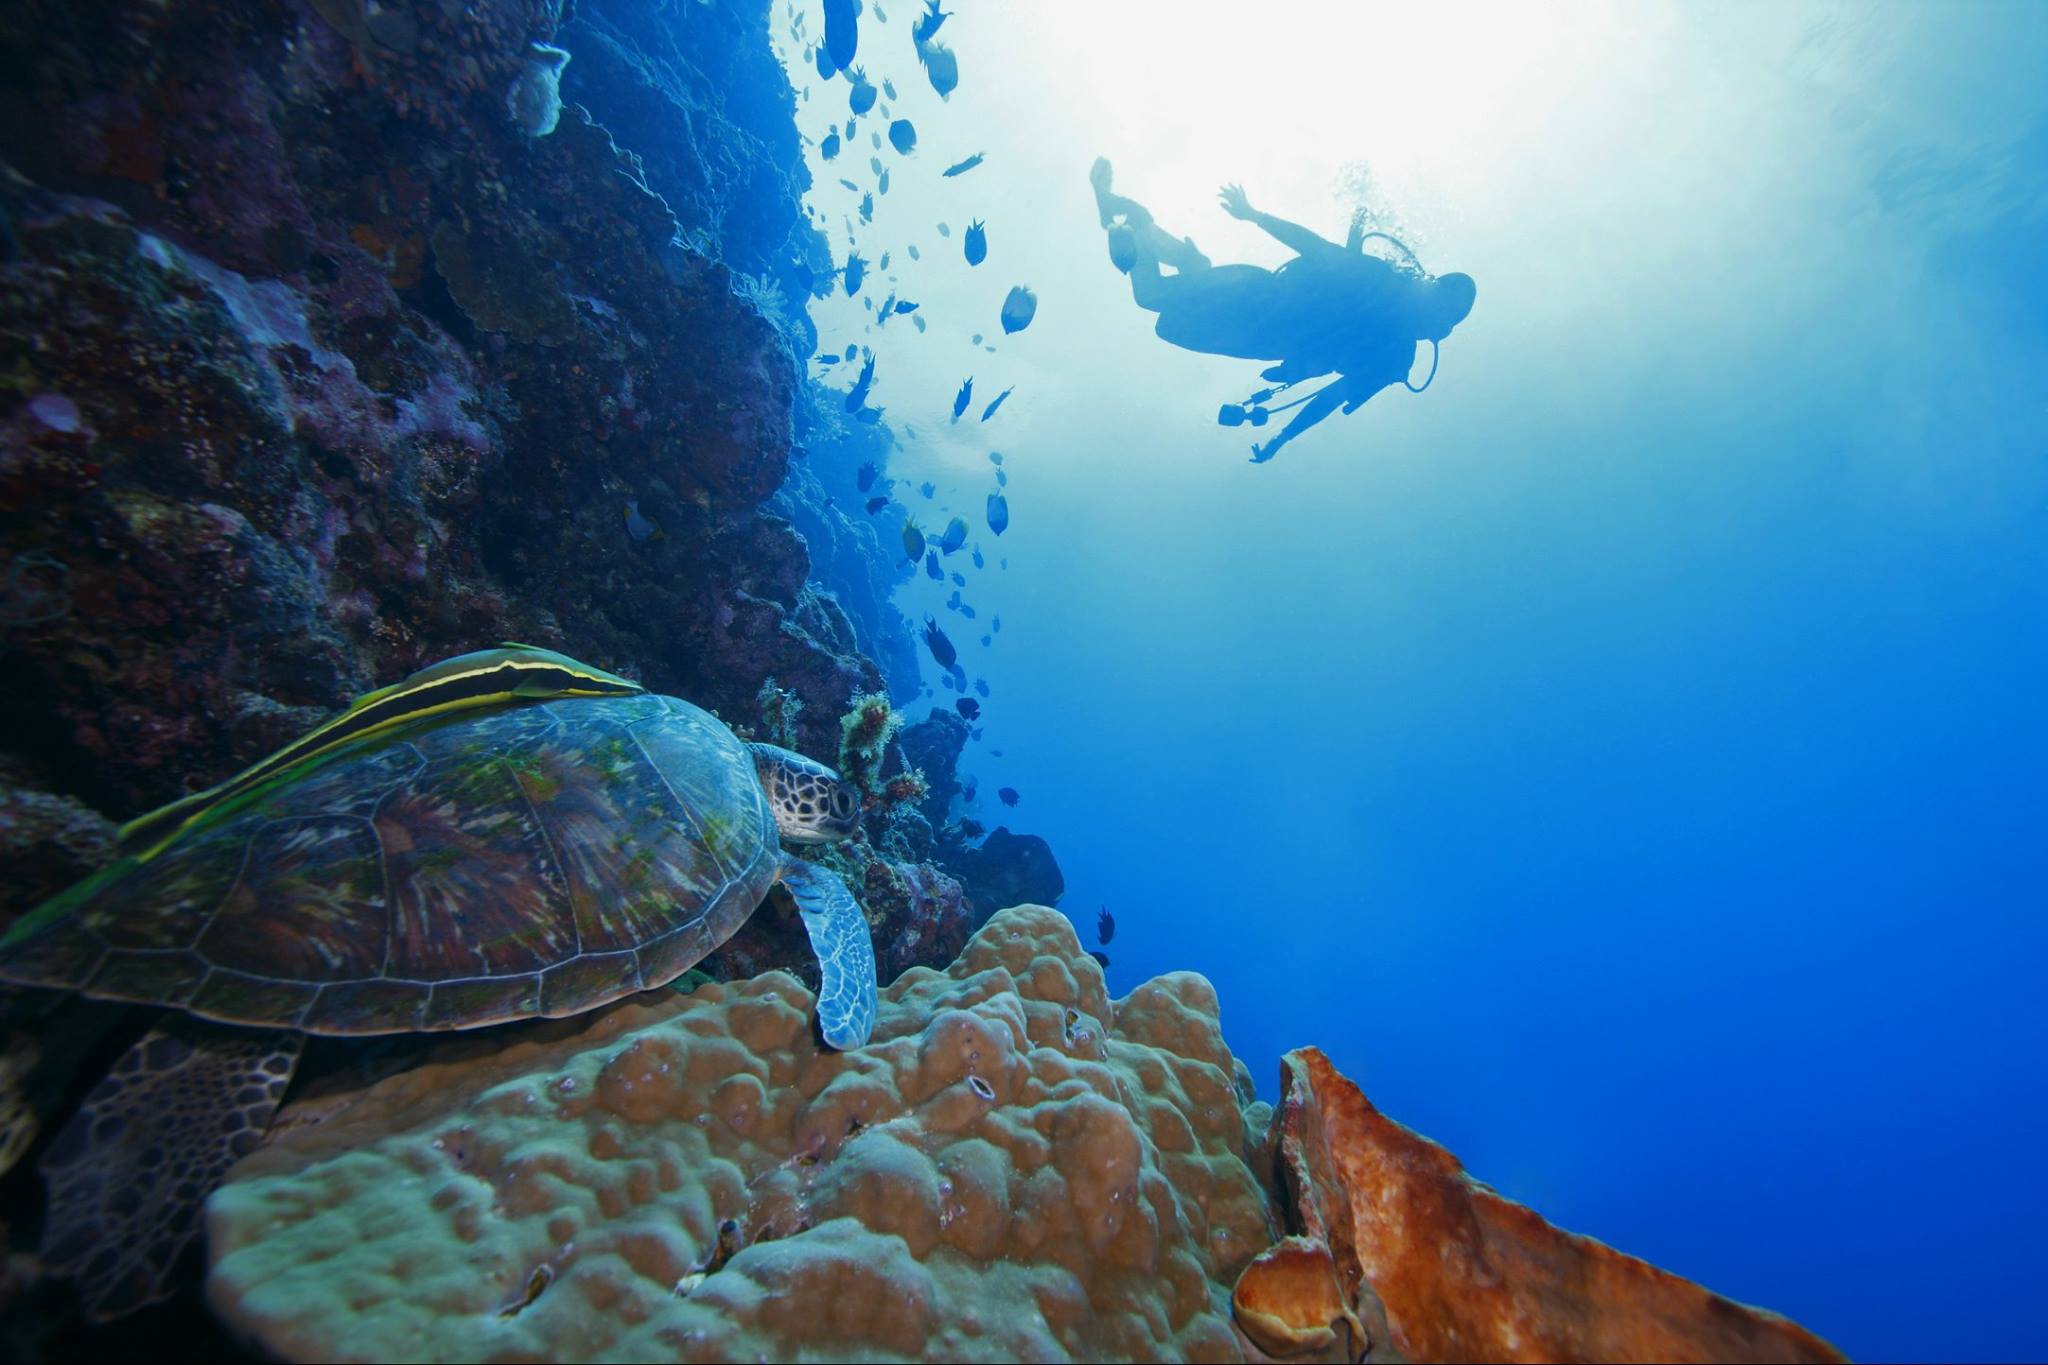 Submarina de tortuga y buzo en relieve marino.